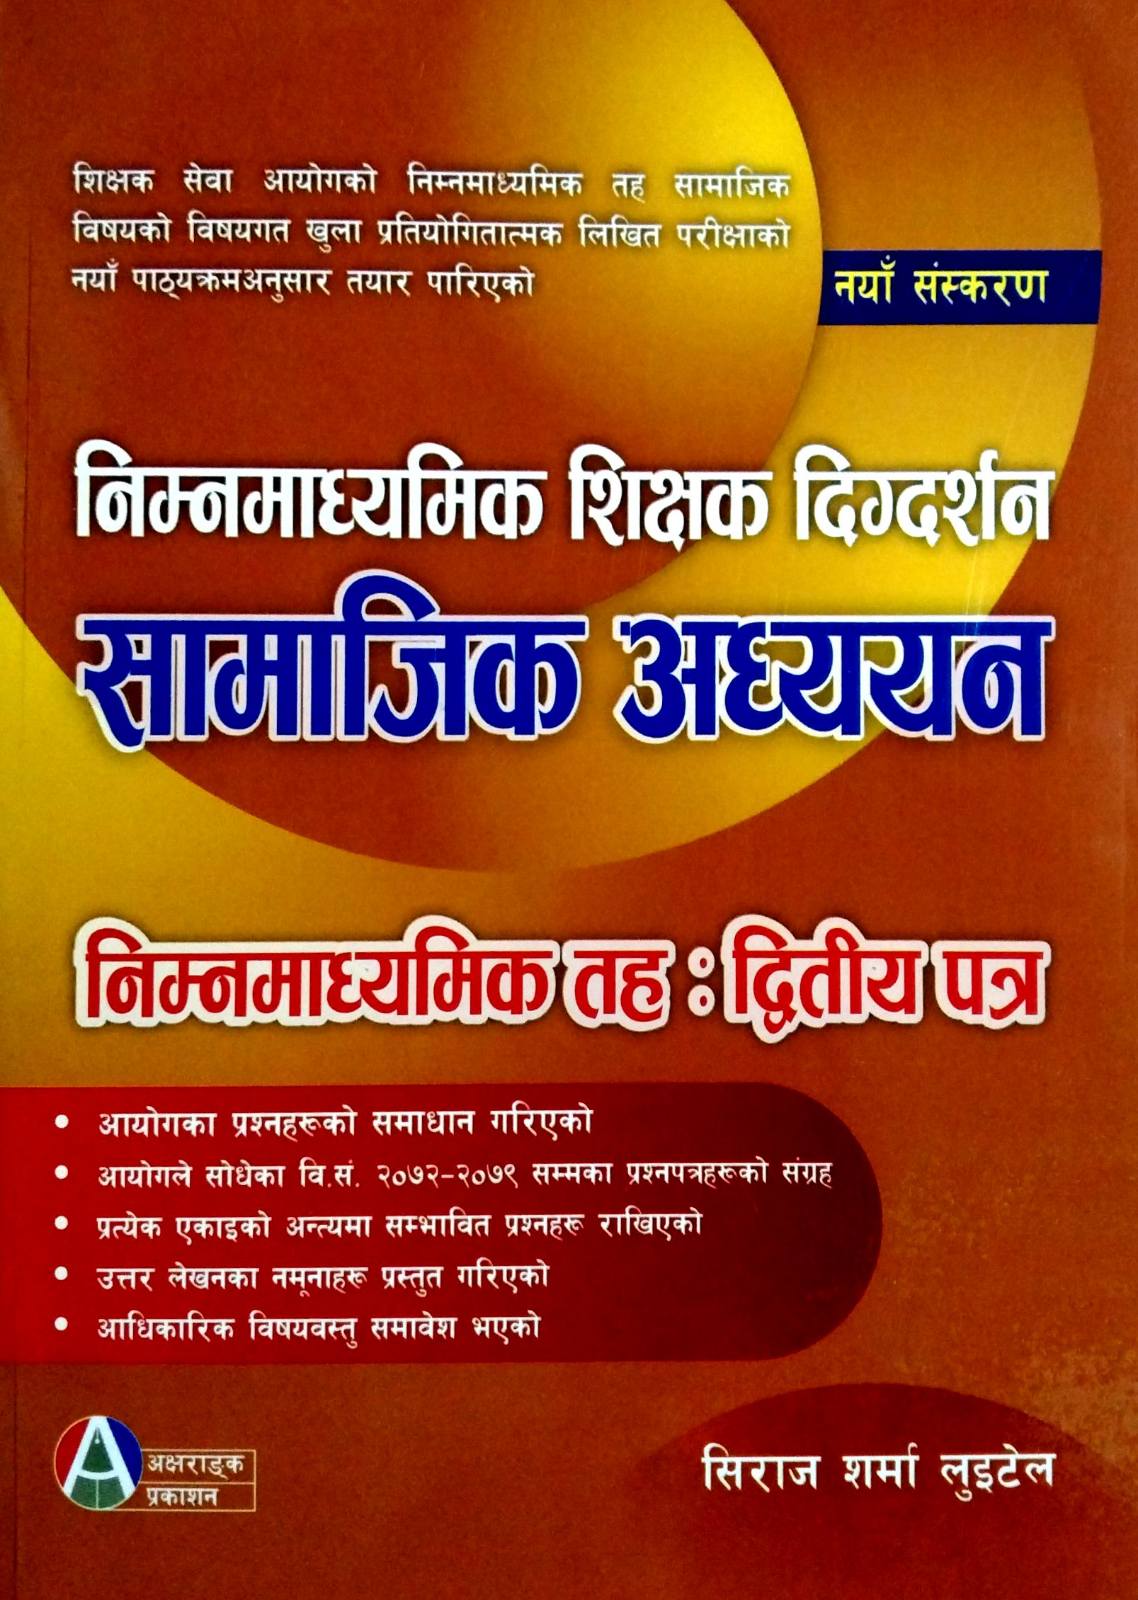 निम्नमाध्यमिक शिक्षक दिग्दर्शन सामाजिक अध्ययन [ Nimnamadhyamik Shikshak Digdarshan Samajik Adhyayan ] : द्वितिय पत्र